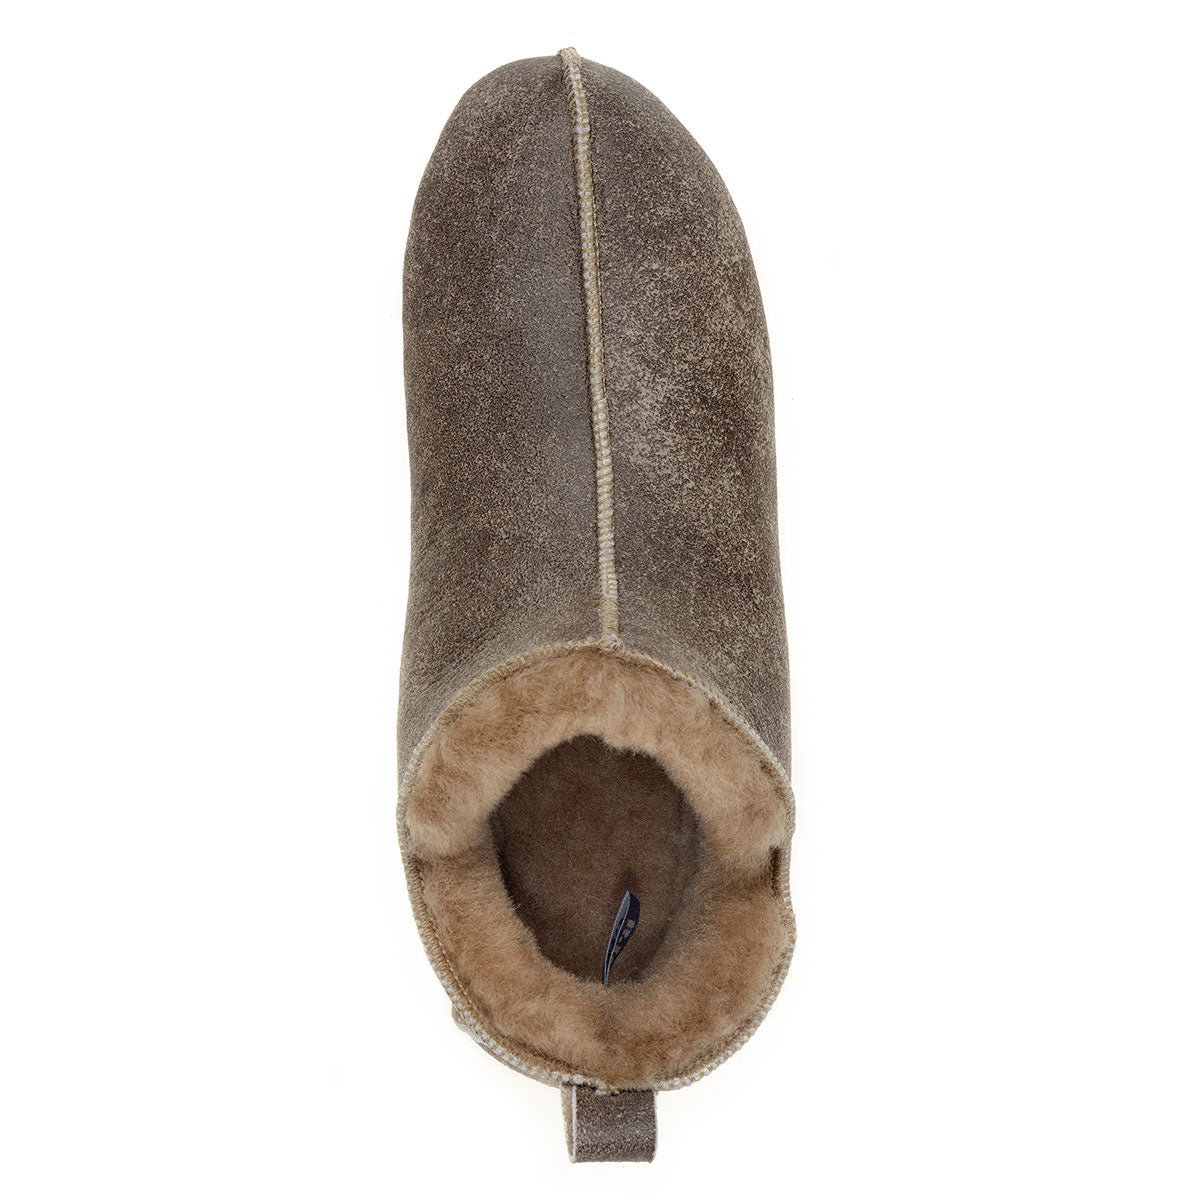 Berit Sheepskin Slippers - Nutmeg Distressed Leather